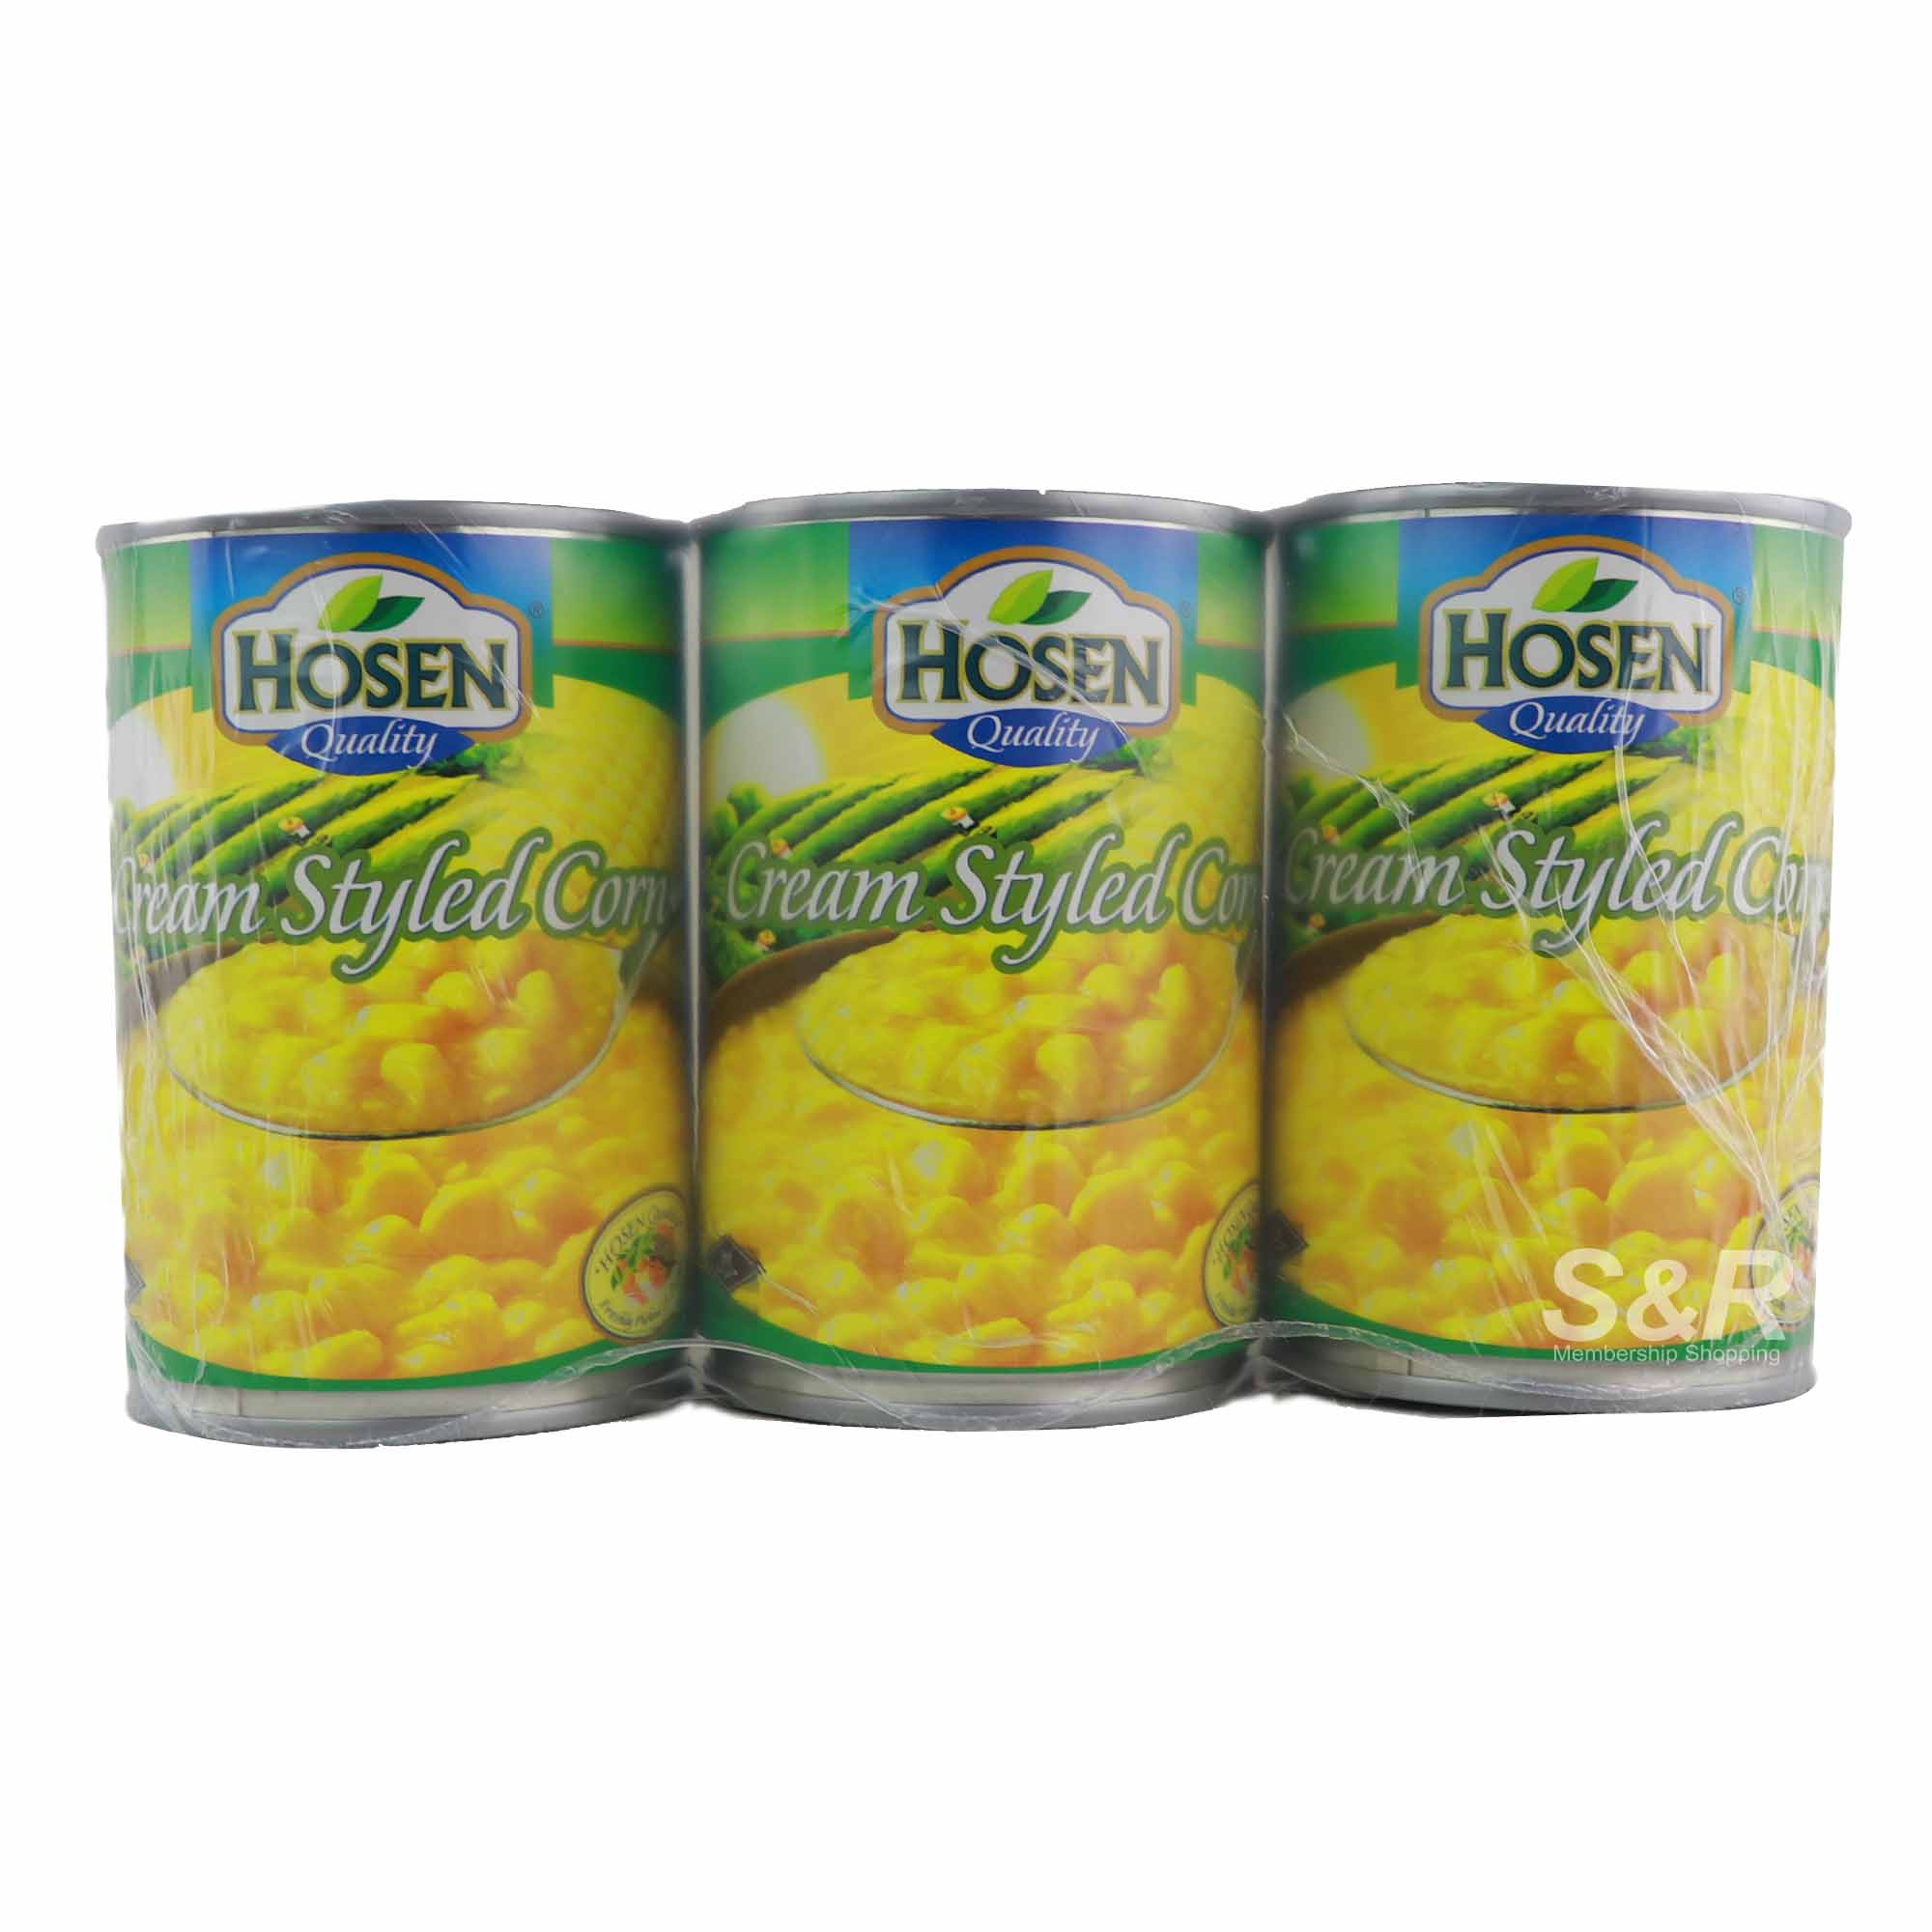 Hosen Quality Cream Styled Corn 3 cans